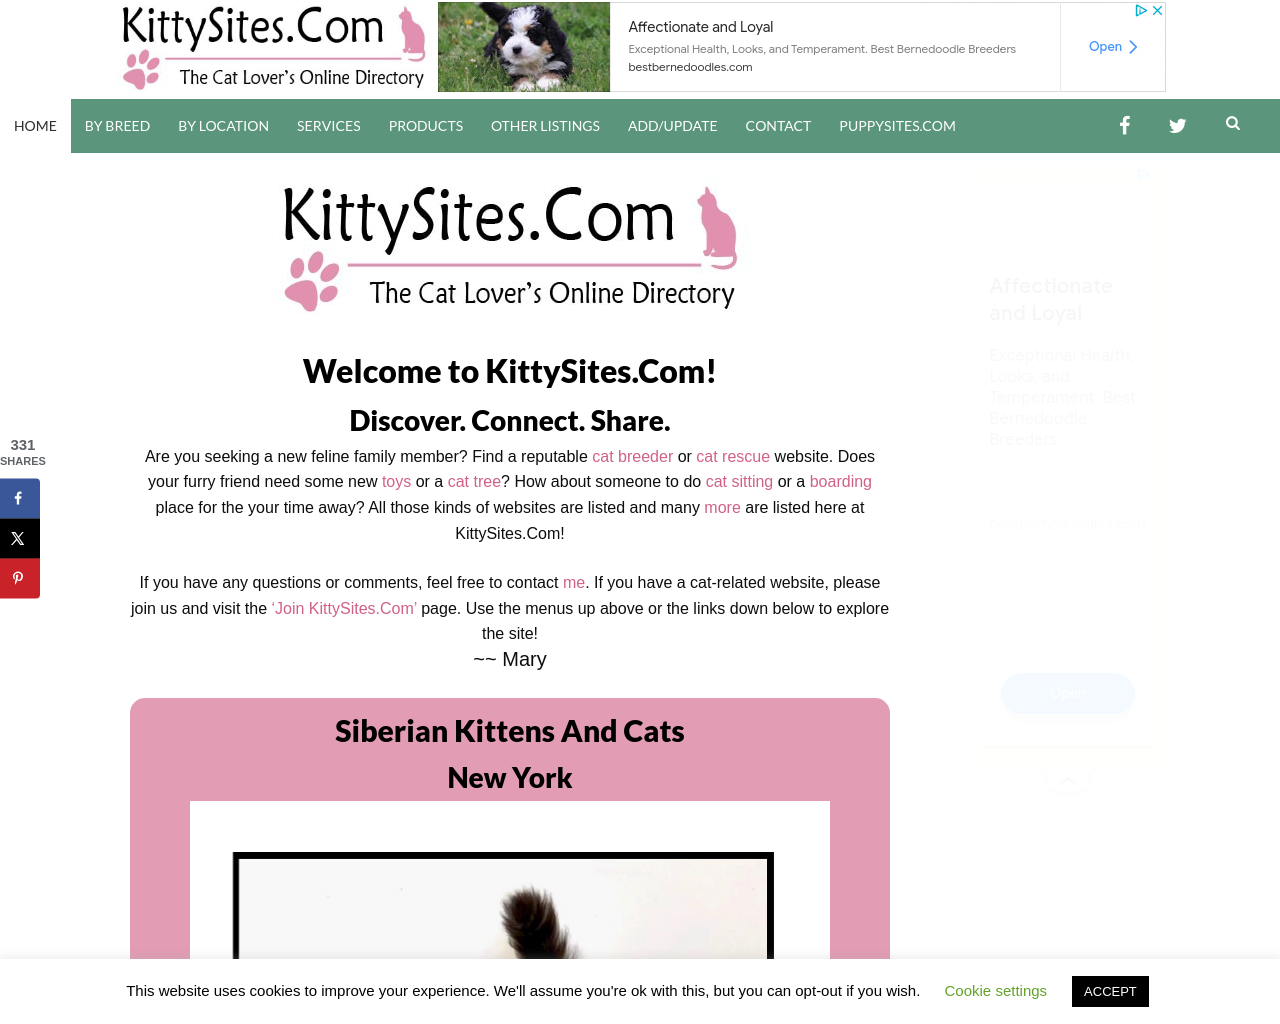 kittysites.com